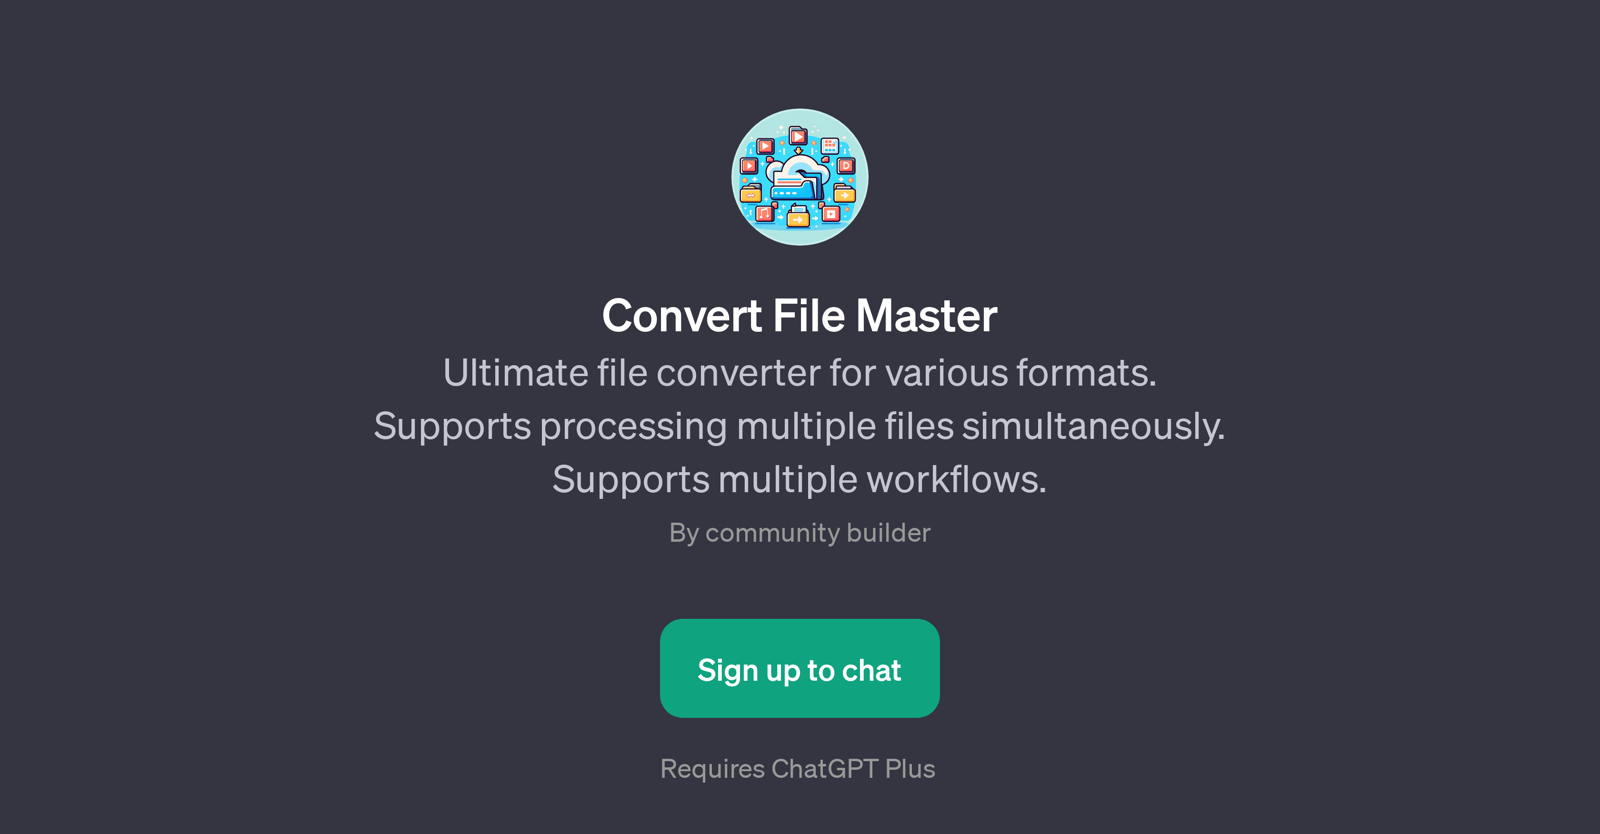 Convert File Master website